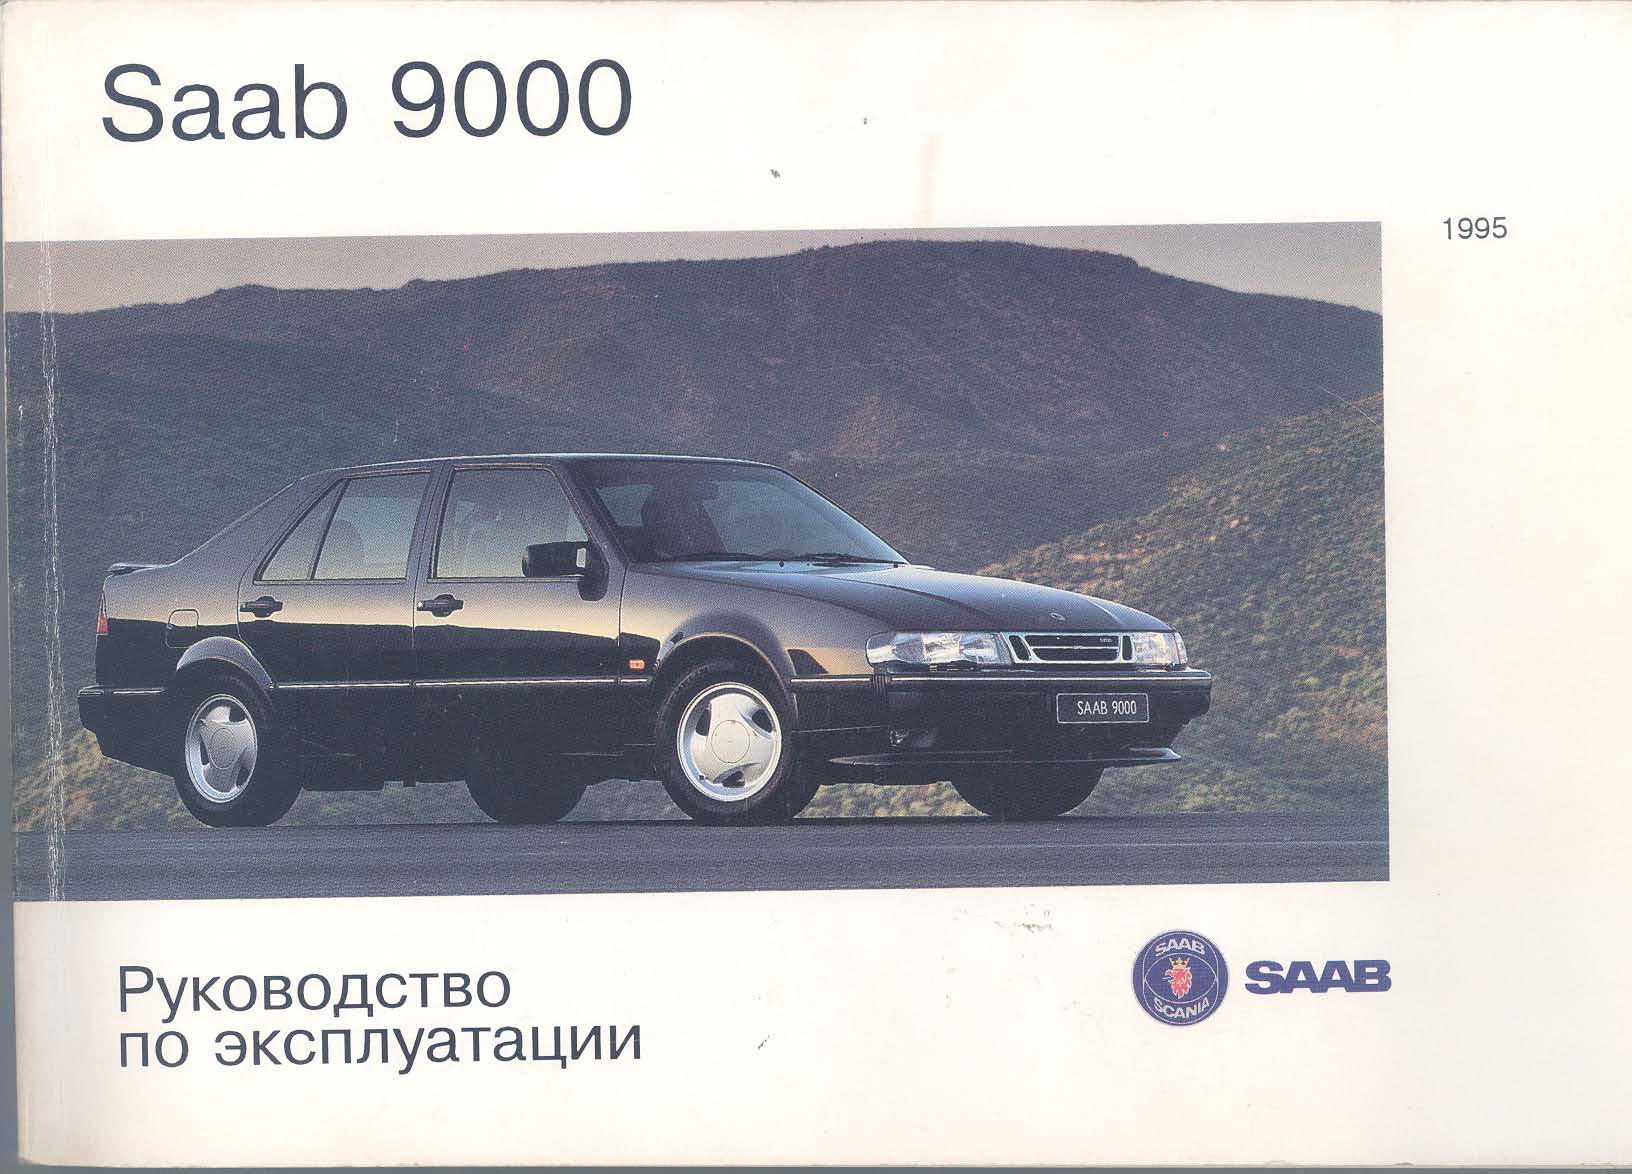 Saab 9 5 — руководство по эксплуатации